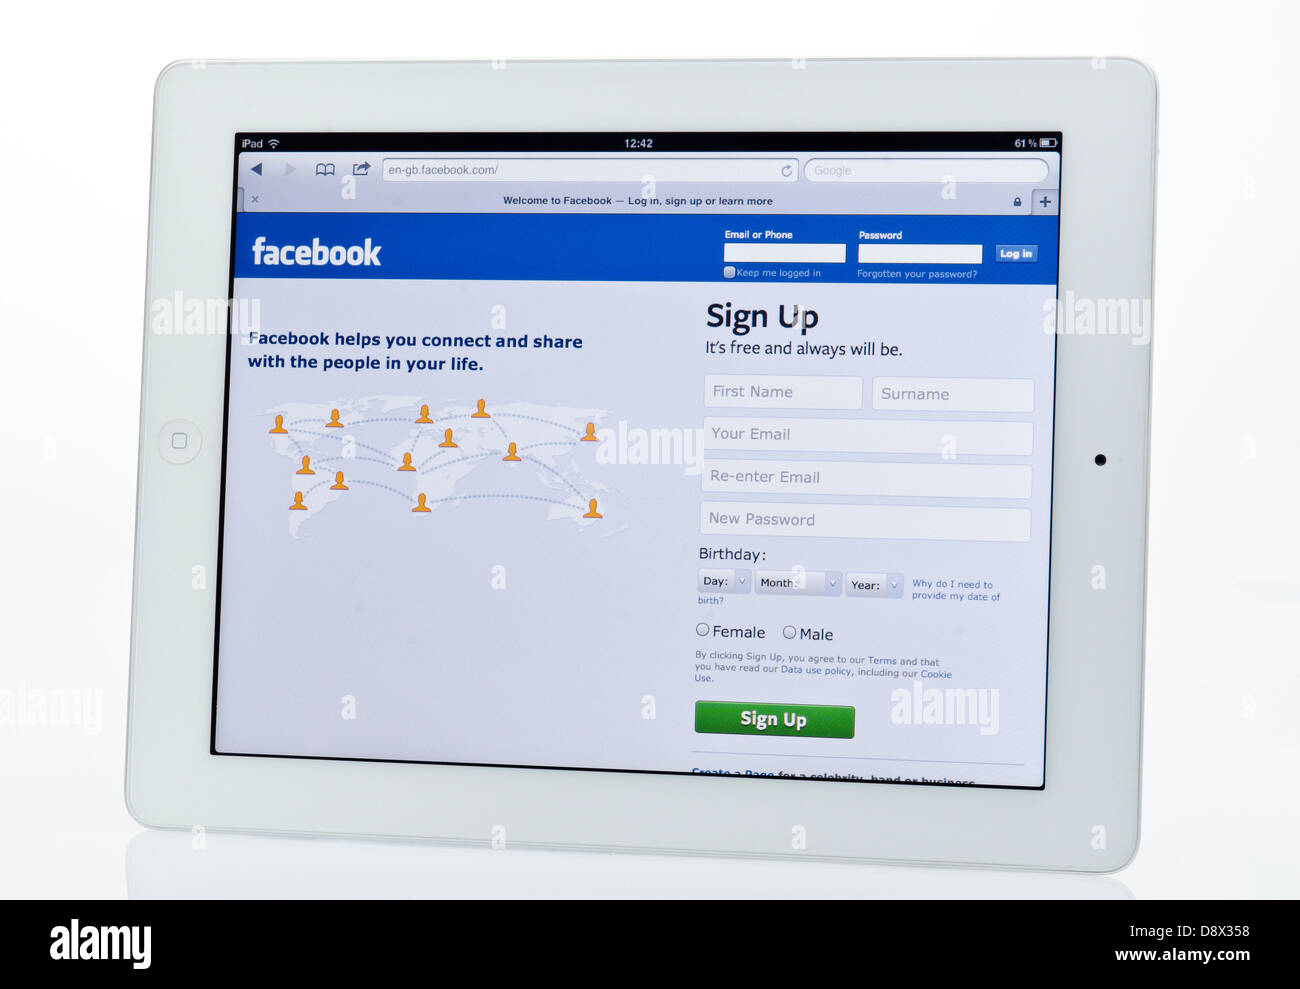 Apple Ipad mostra Facebook Sito di social networking. Foto Stock